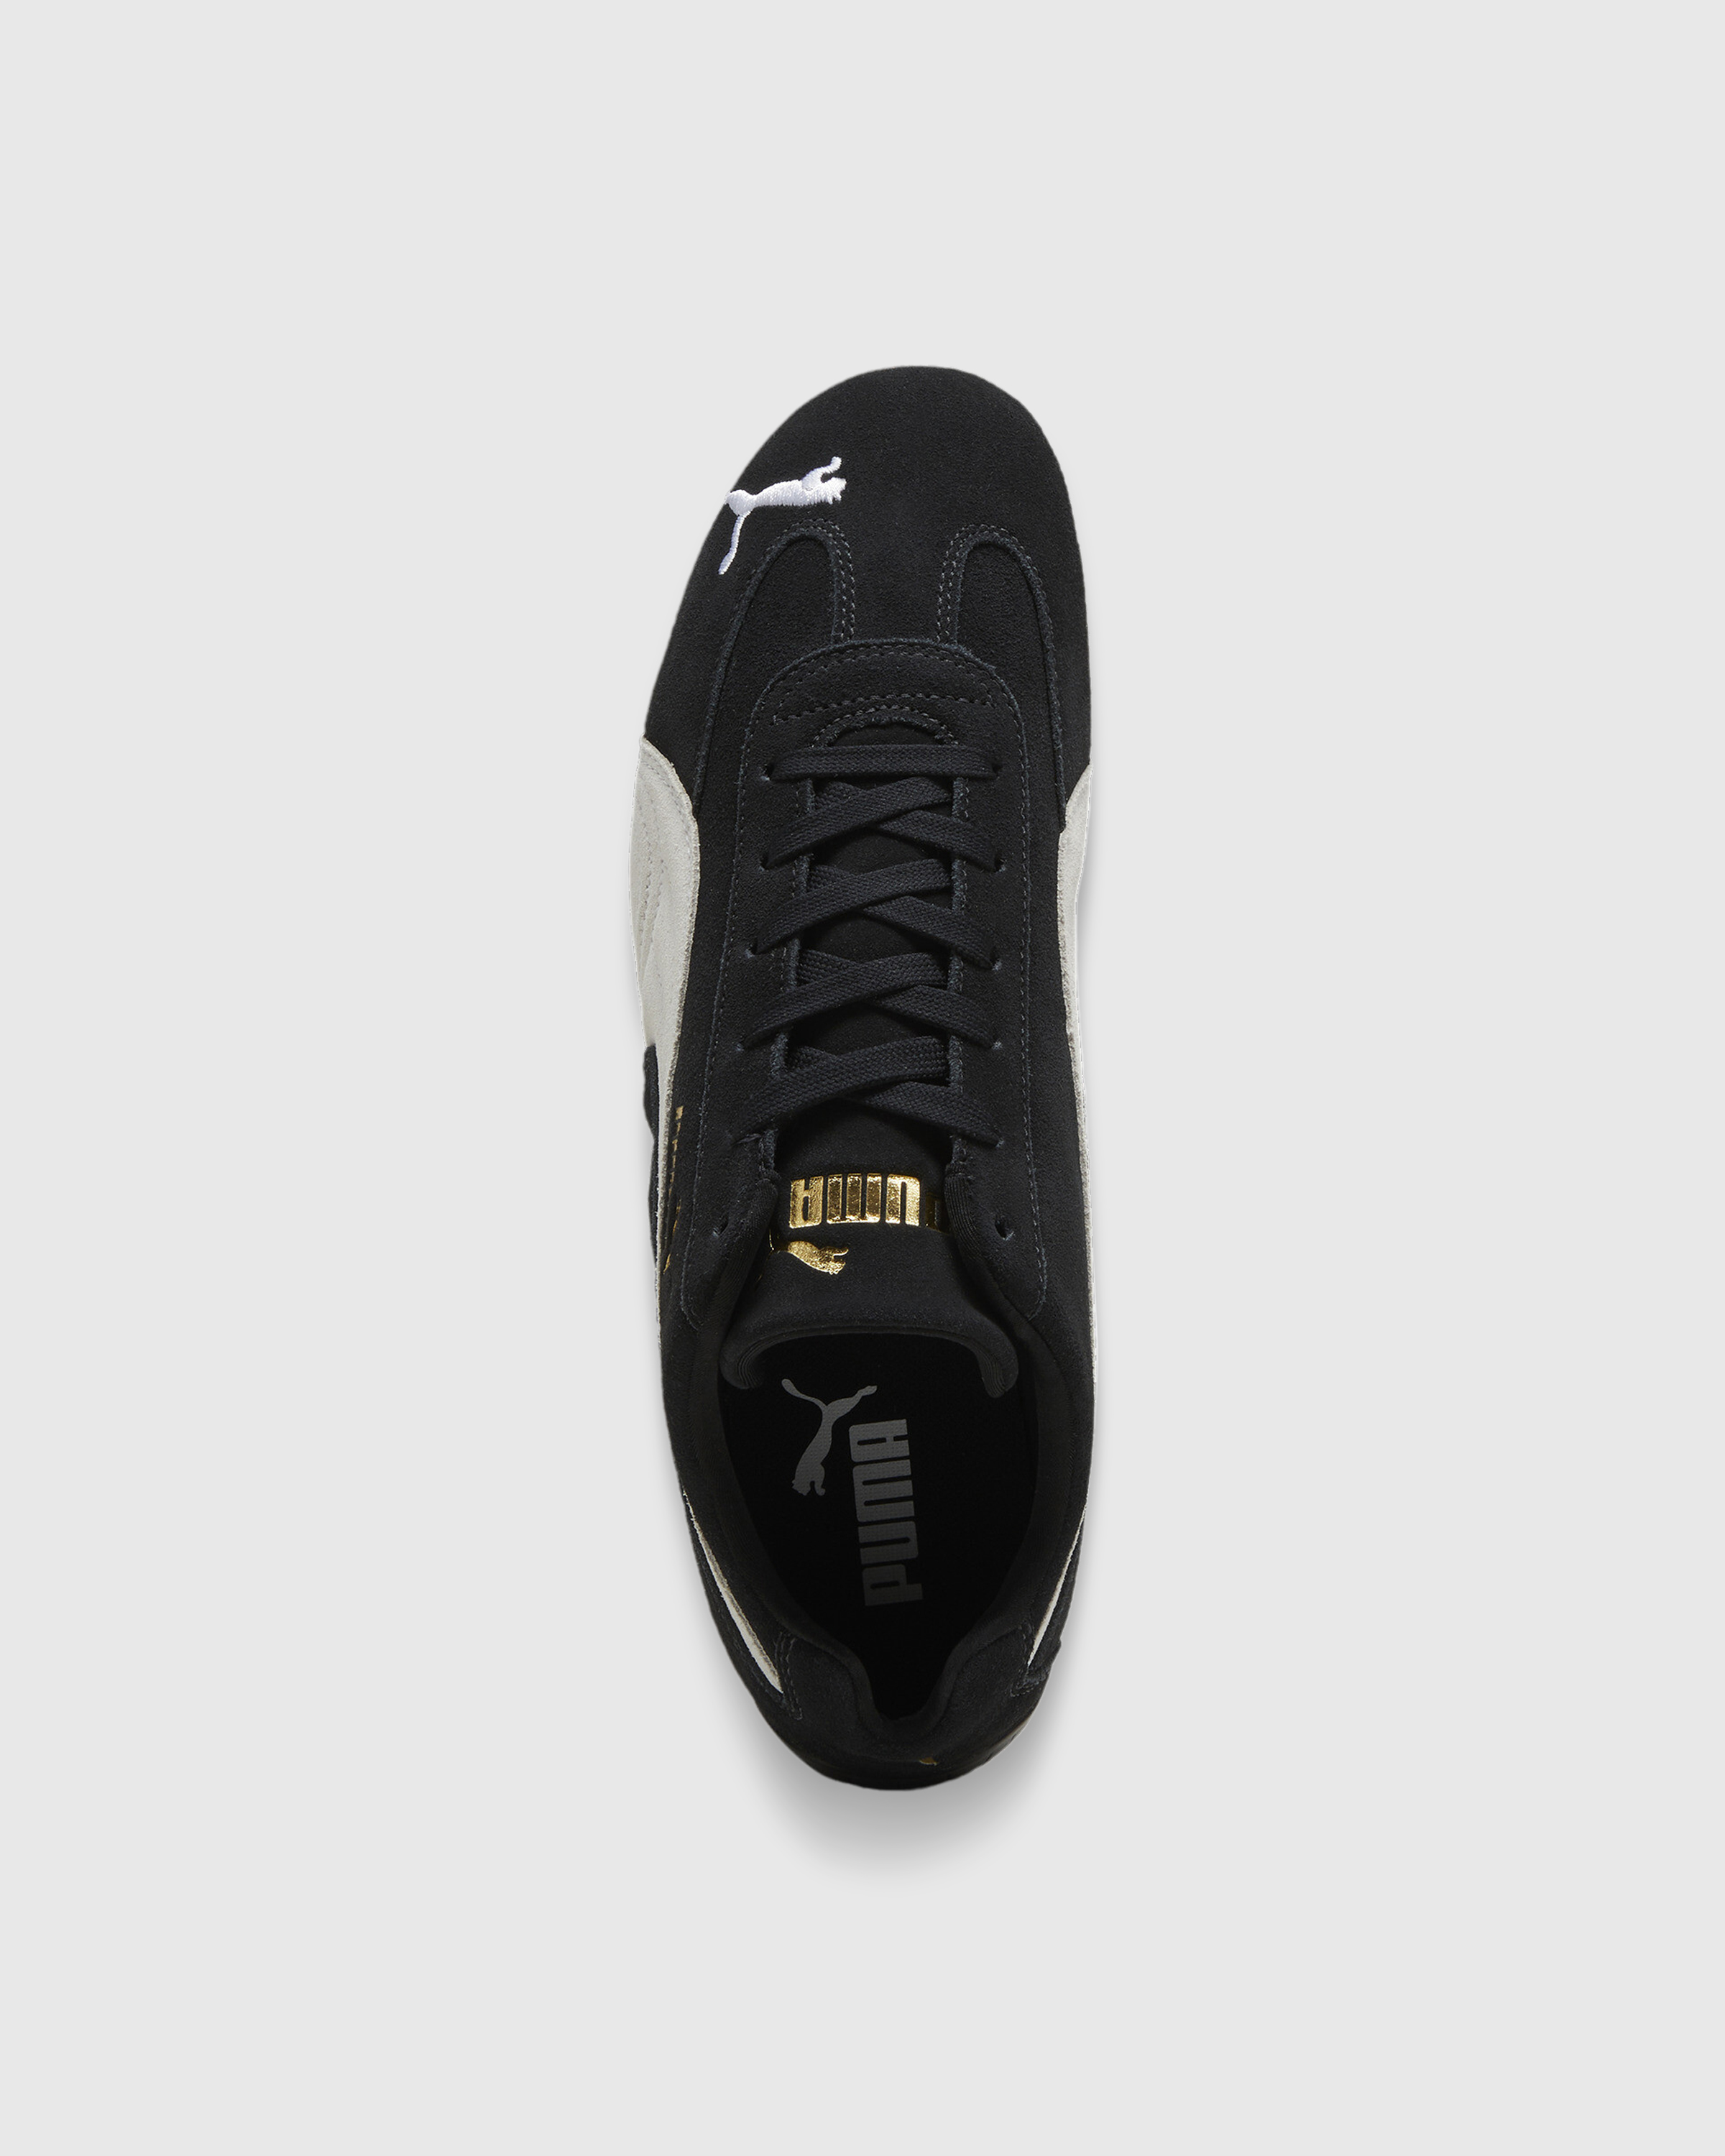 Puma – Speedcat OG Black/White - Low Top Sneakers - Black - Image 3